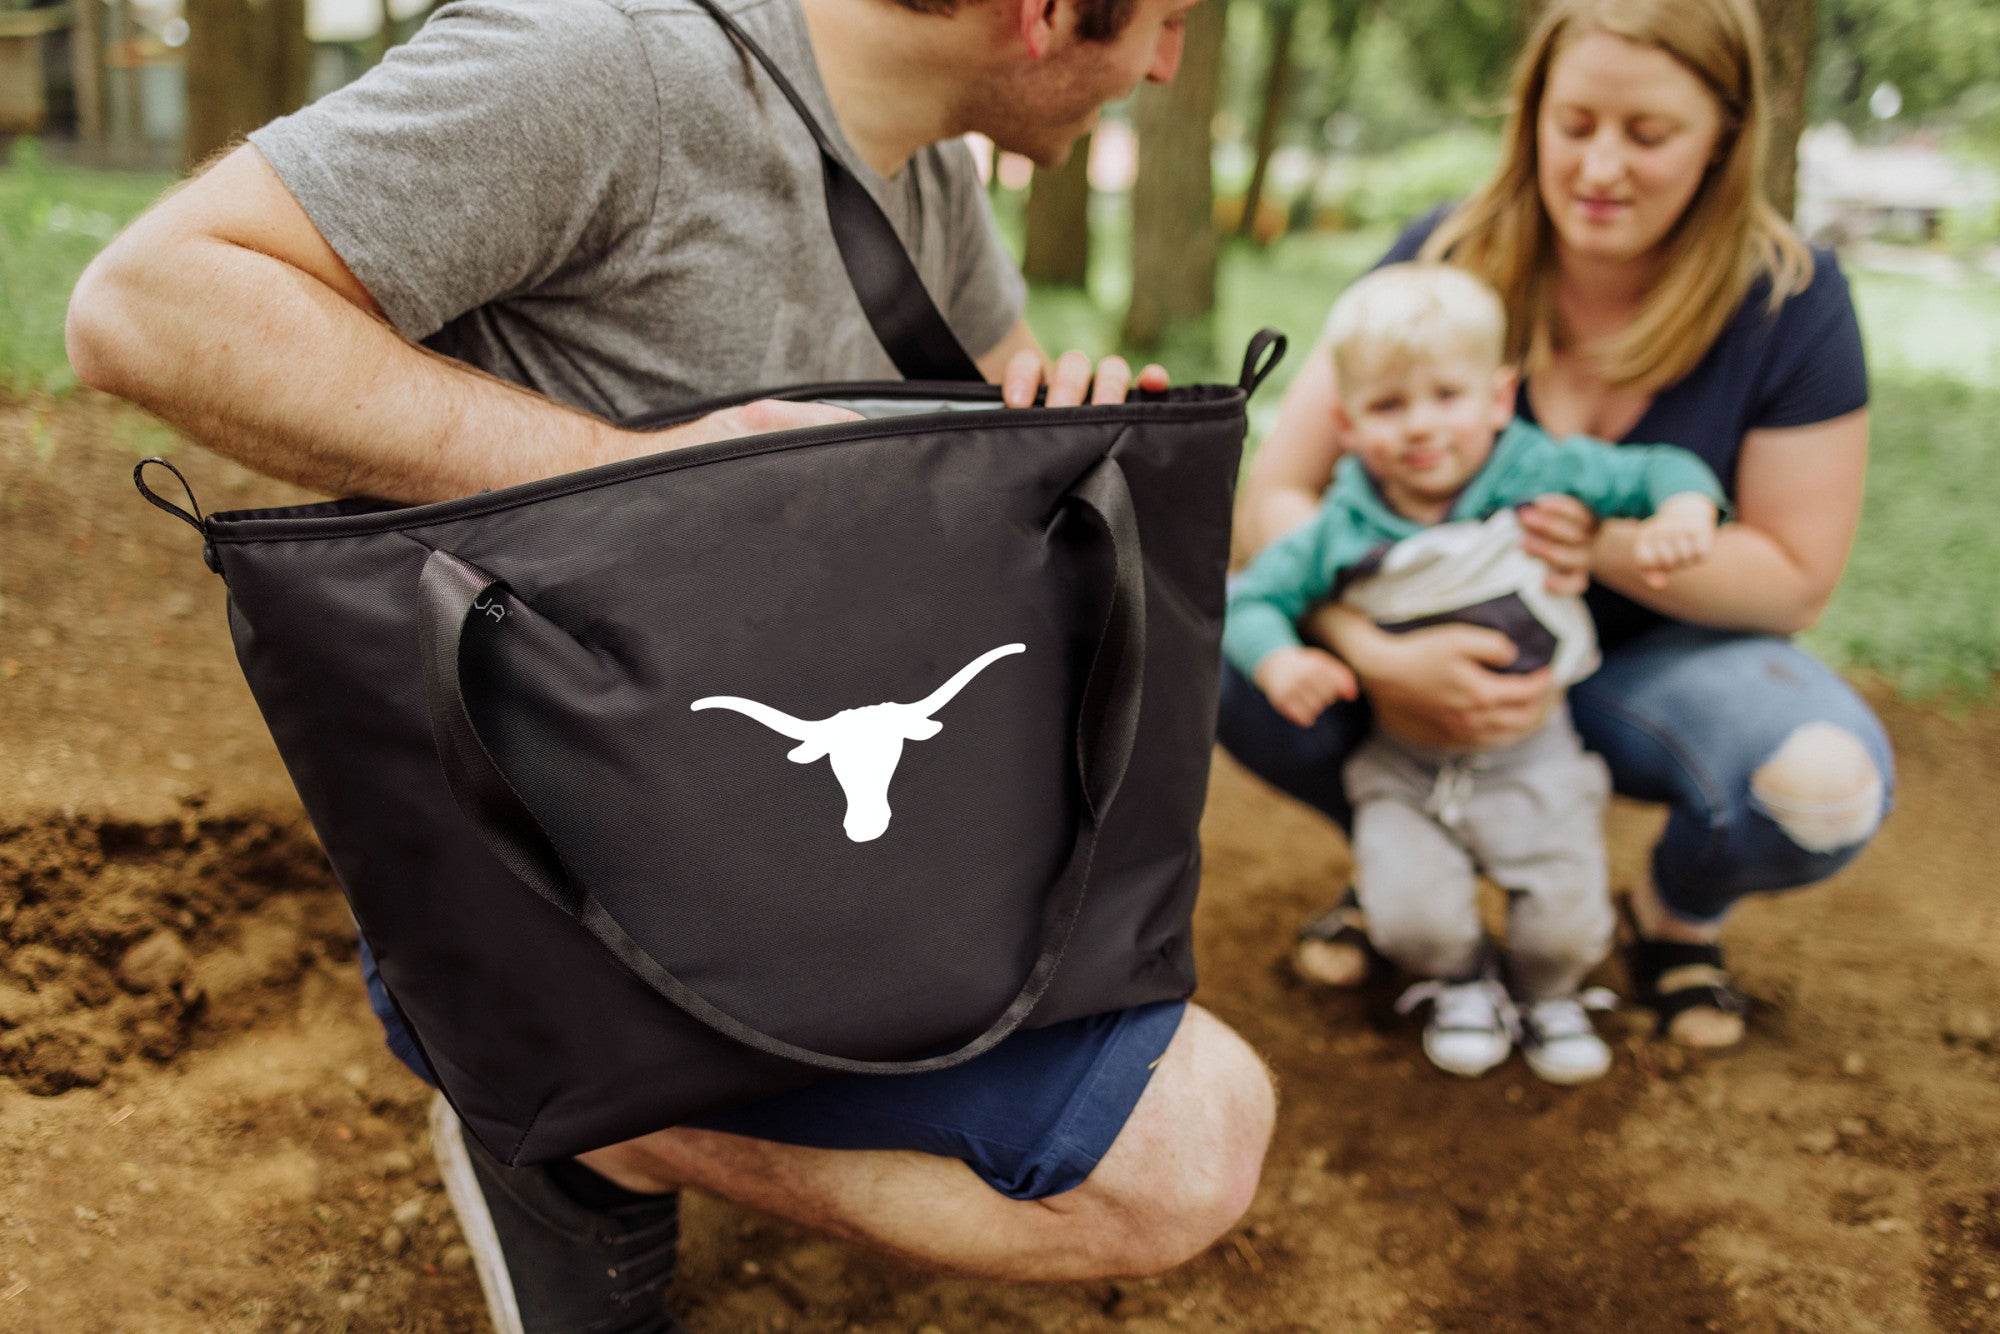 Texas Longhorns - Tarana Cooler Tote Bag